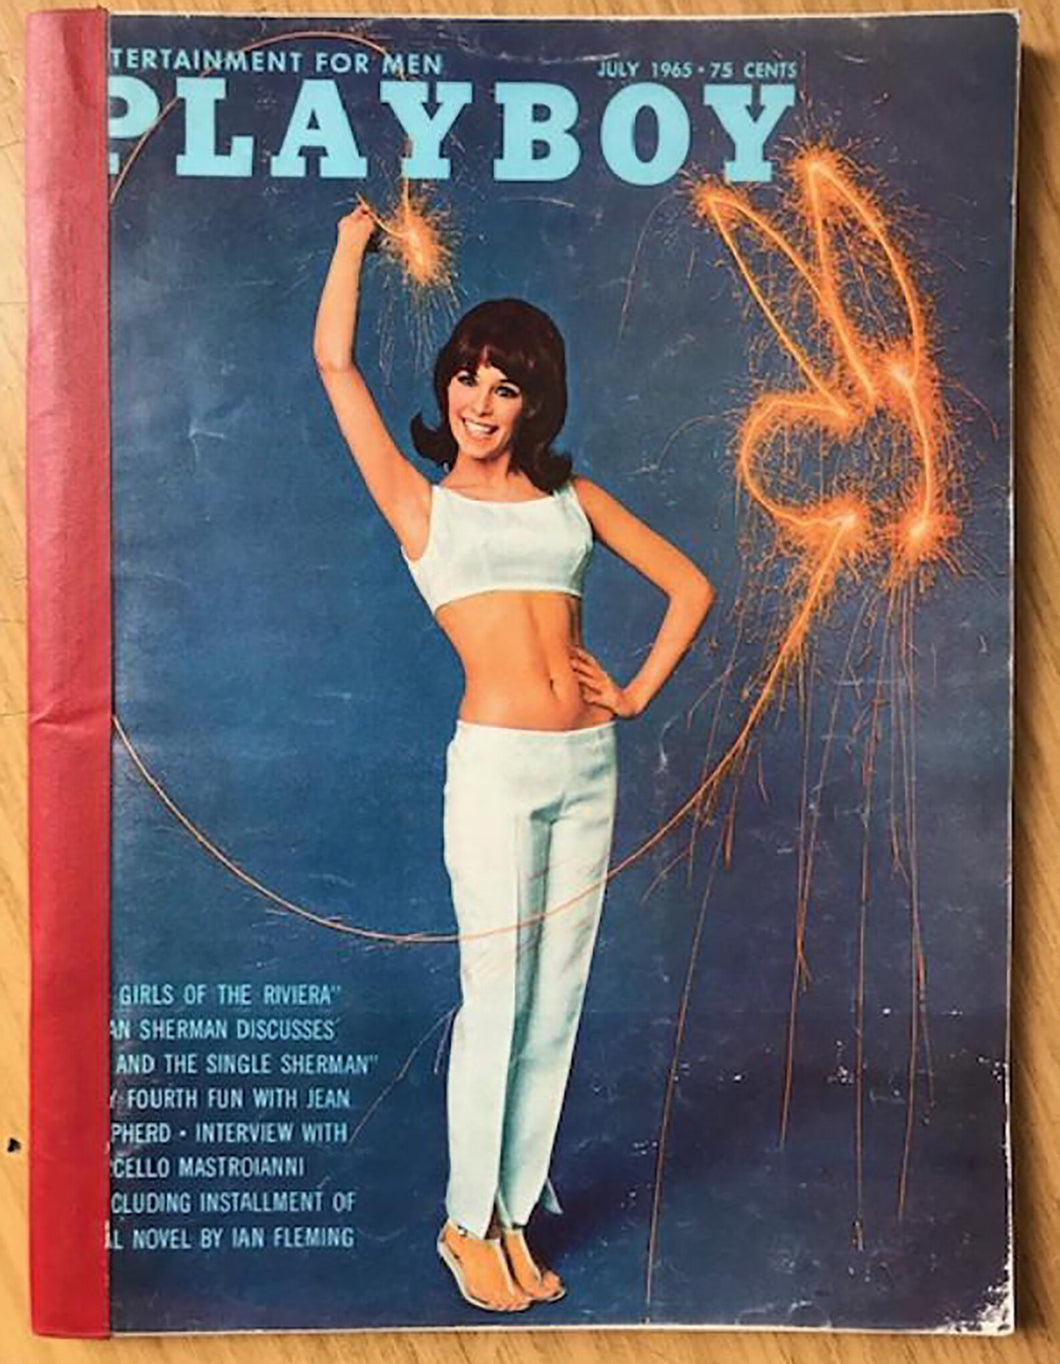 Playboy July 1965